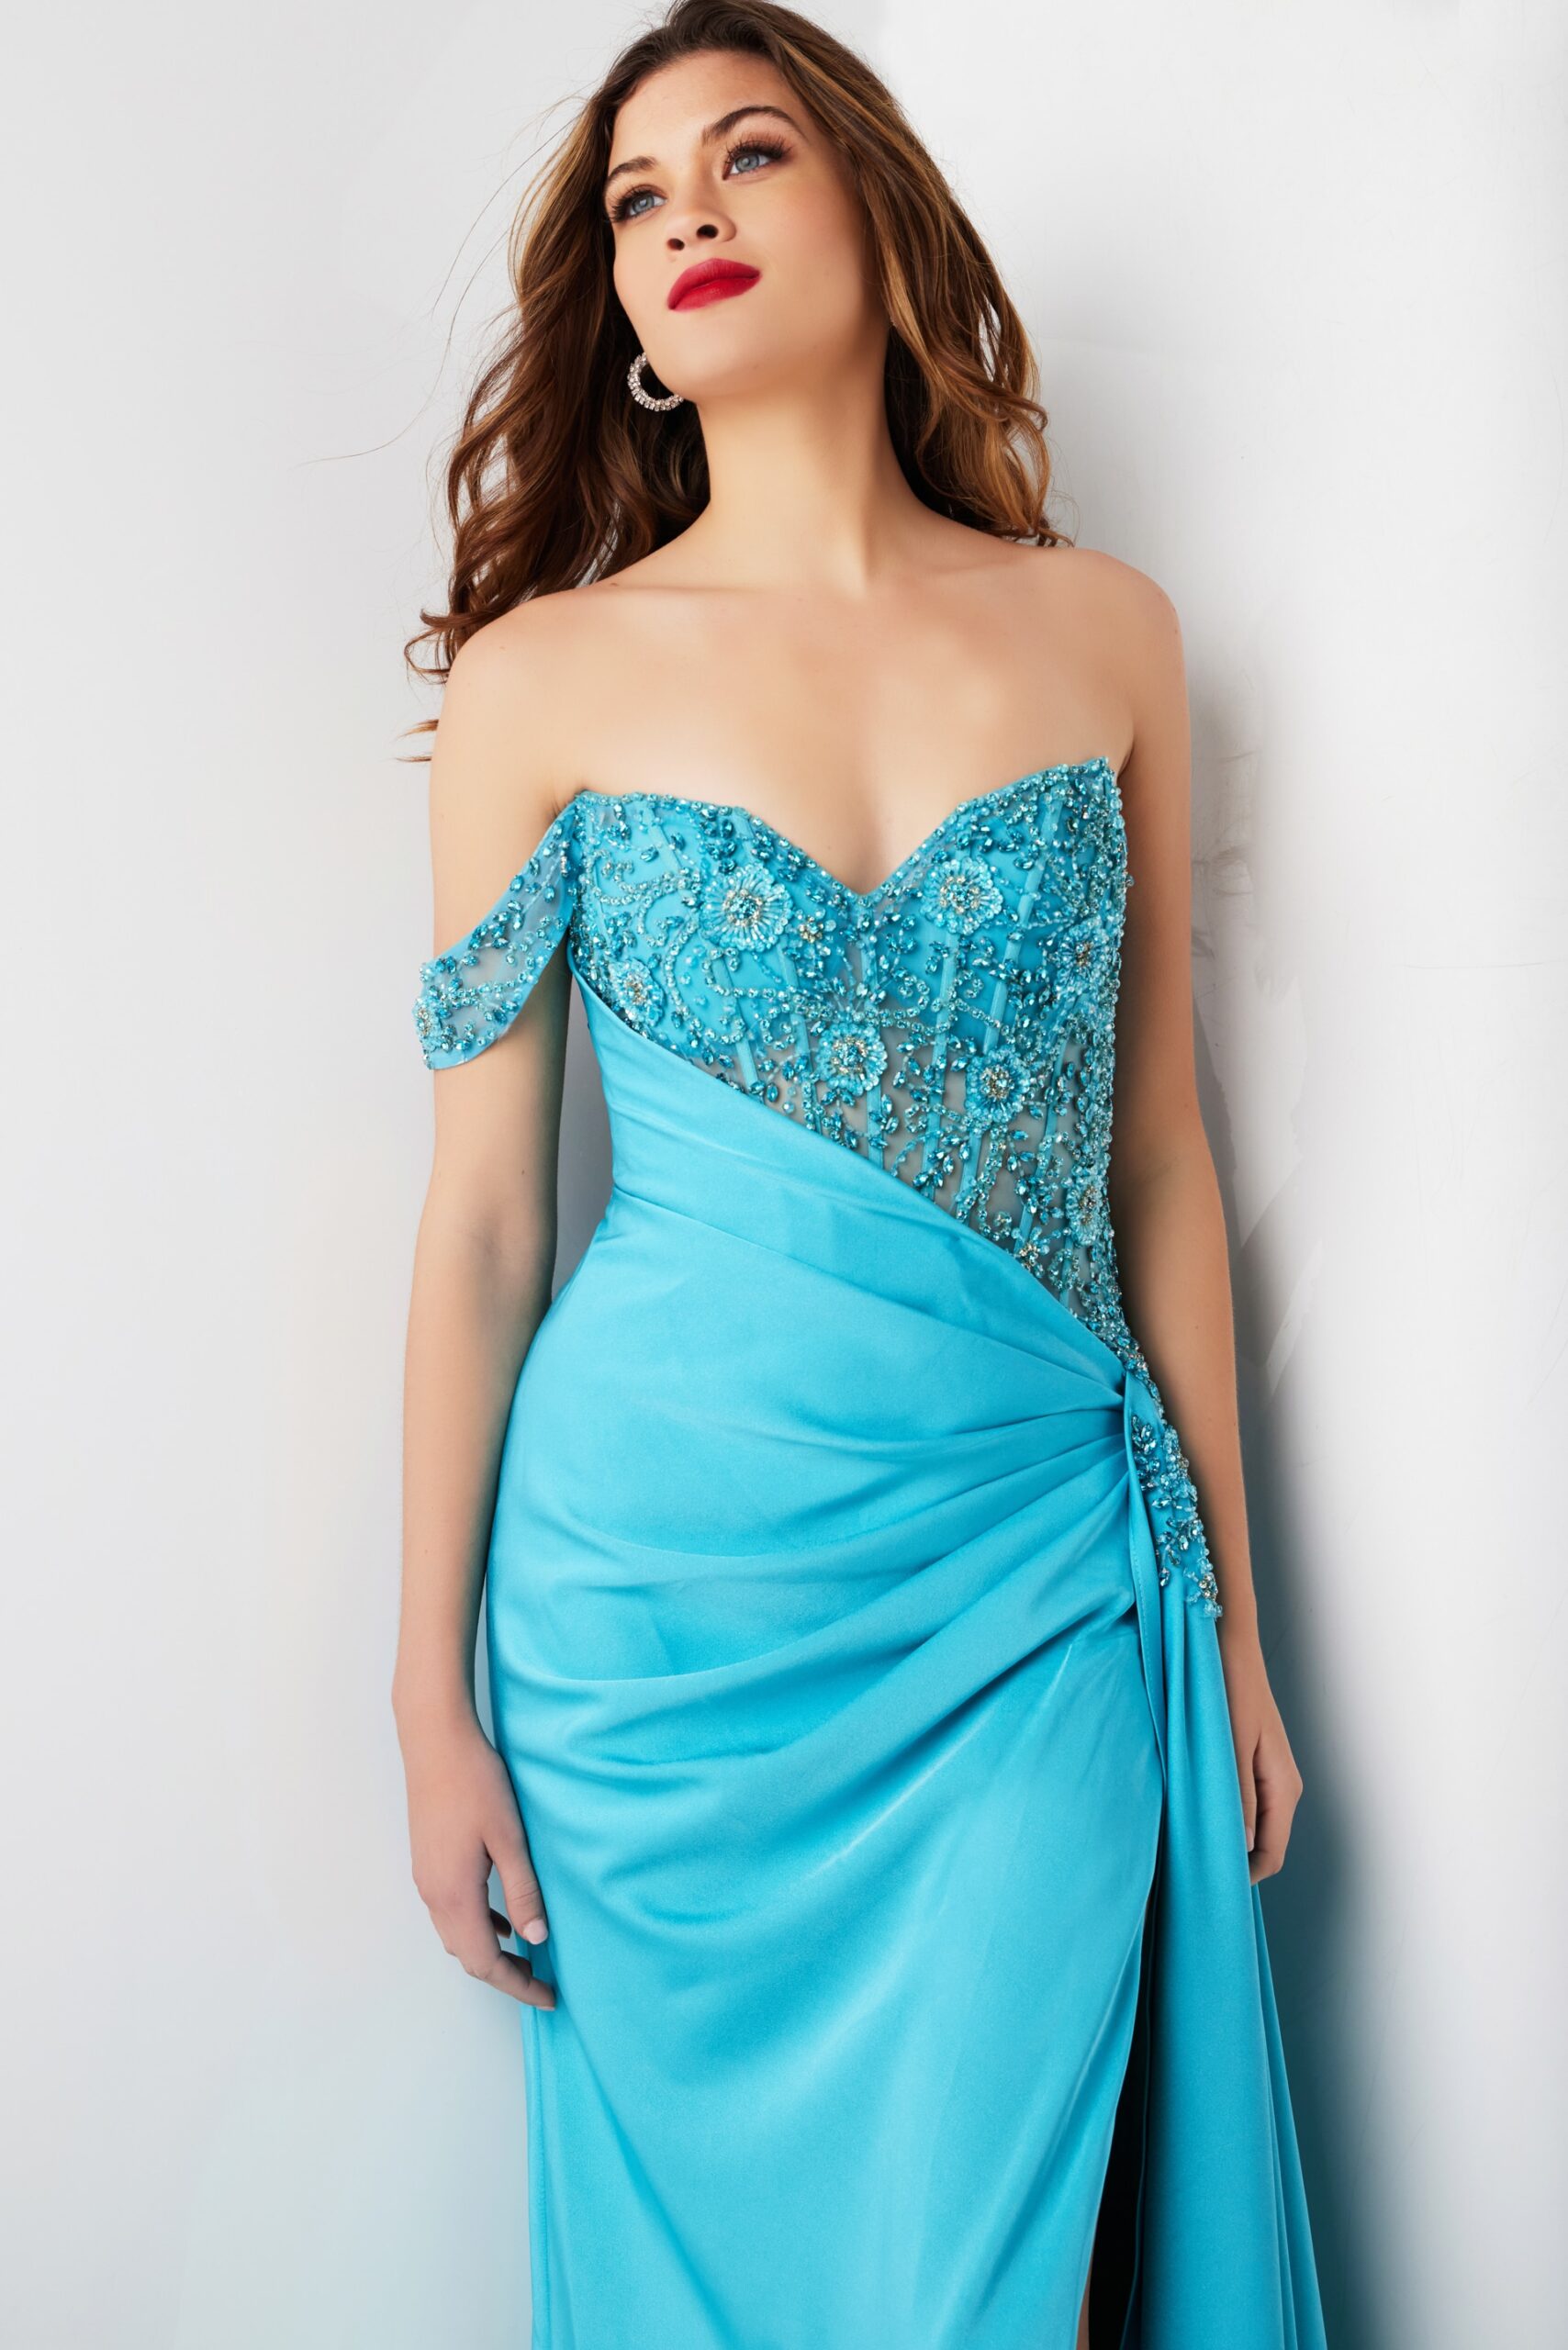 Model wearing Tiffany Blue Embellished Corset Bodice Gown 37094